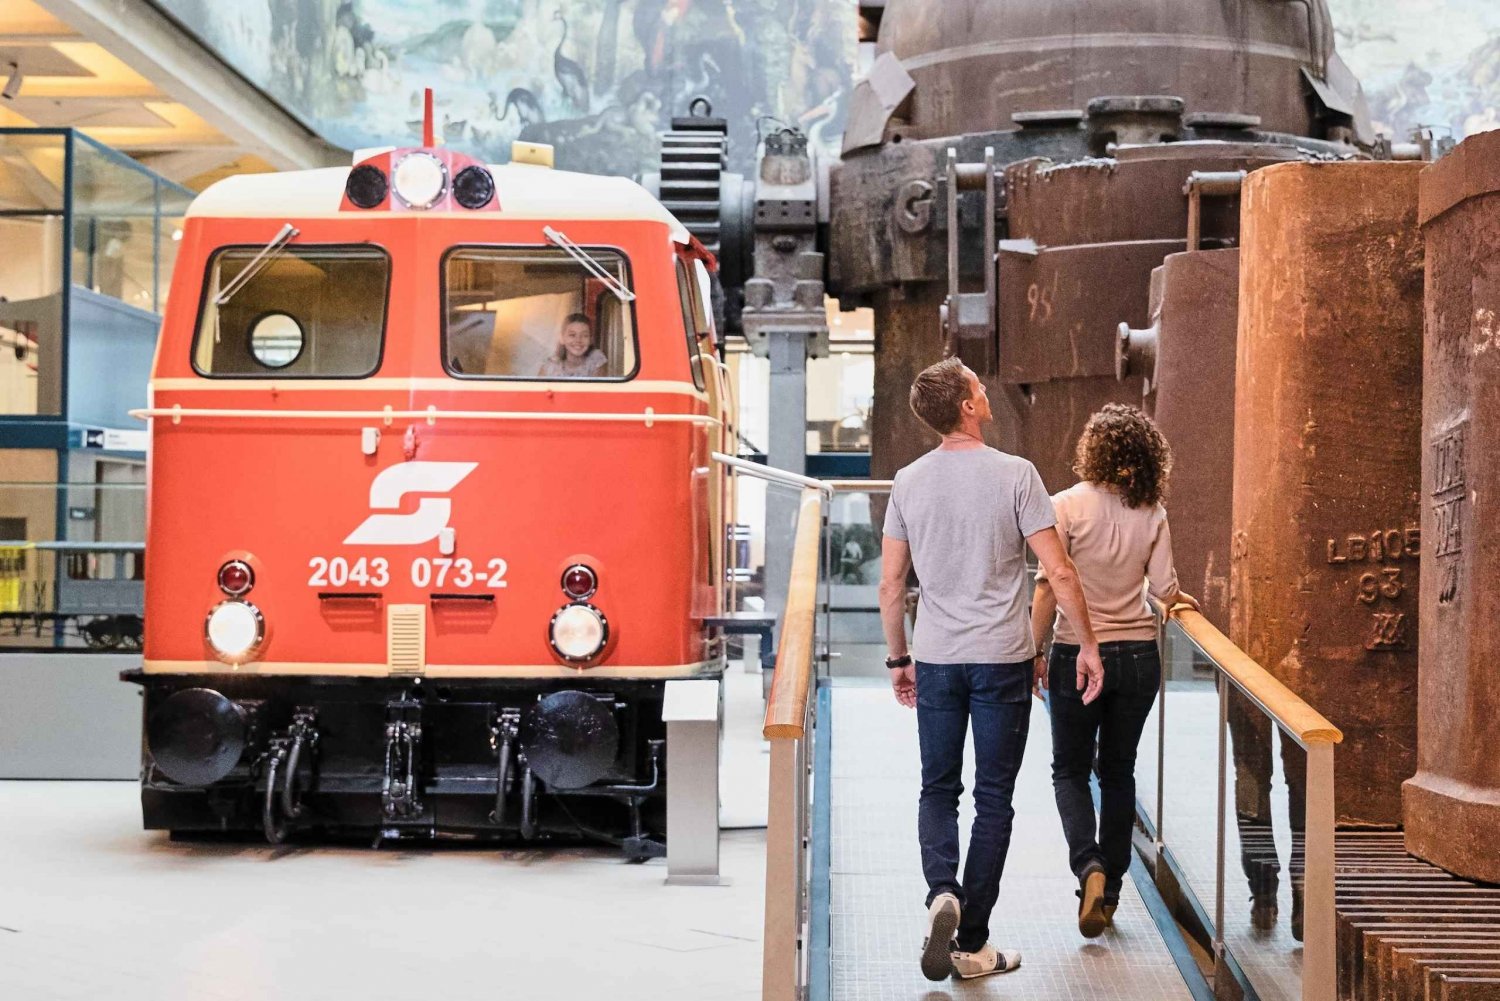 Wien: skip-køen-adgang til Museum of Technology